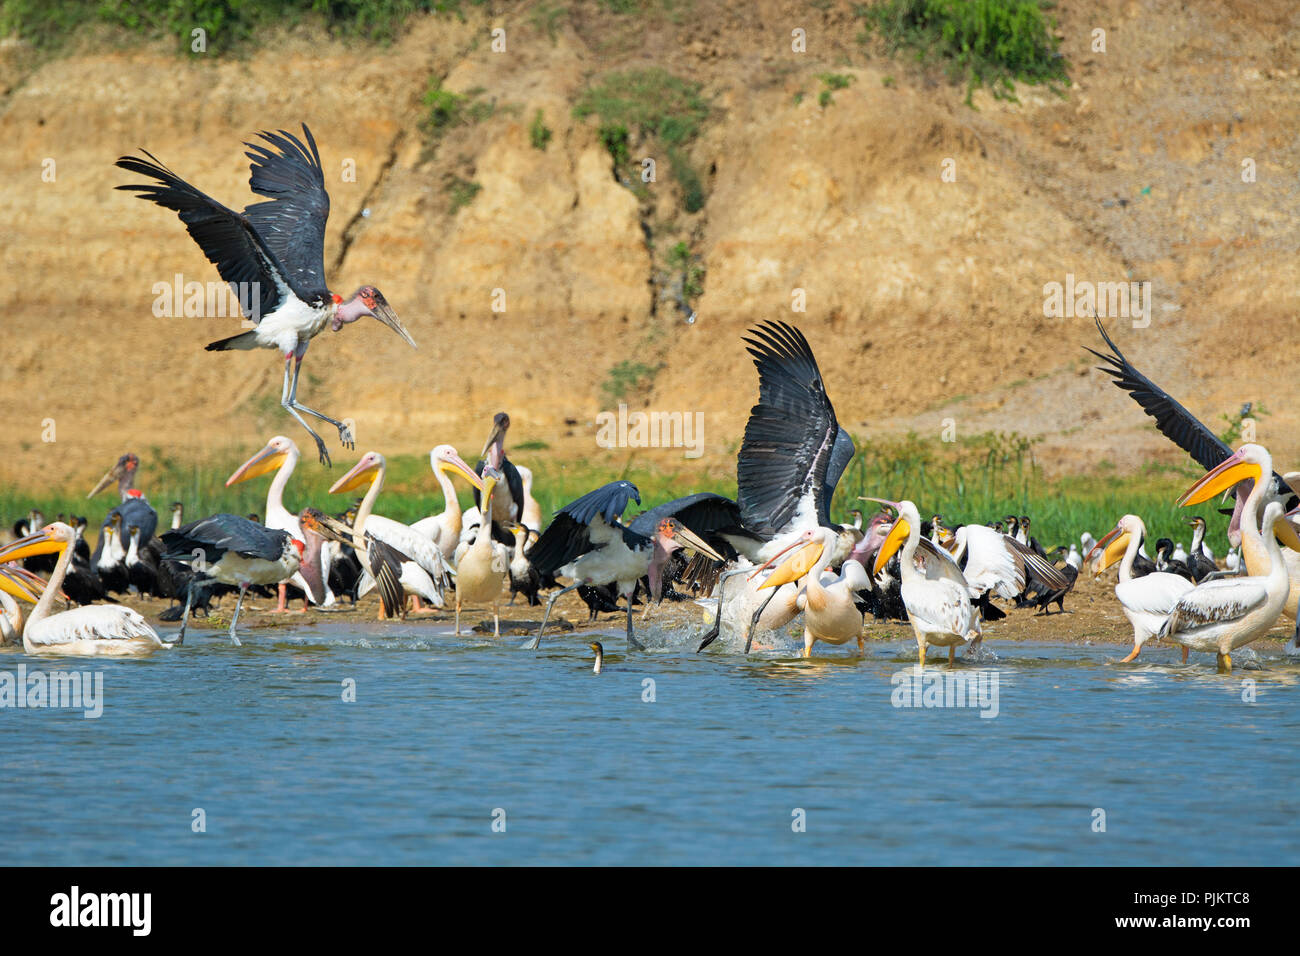 Great White Pelicans, Pelican, White Breasted Cormorant, Cormorants and Marabou Storks, Birds Kazinga Channel, Queen Elizabeth National Park, Uganda Stock Photo